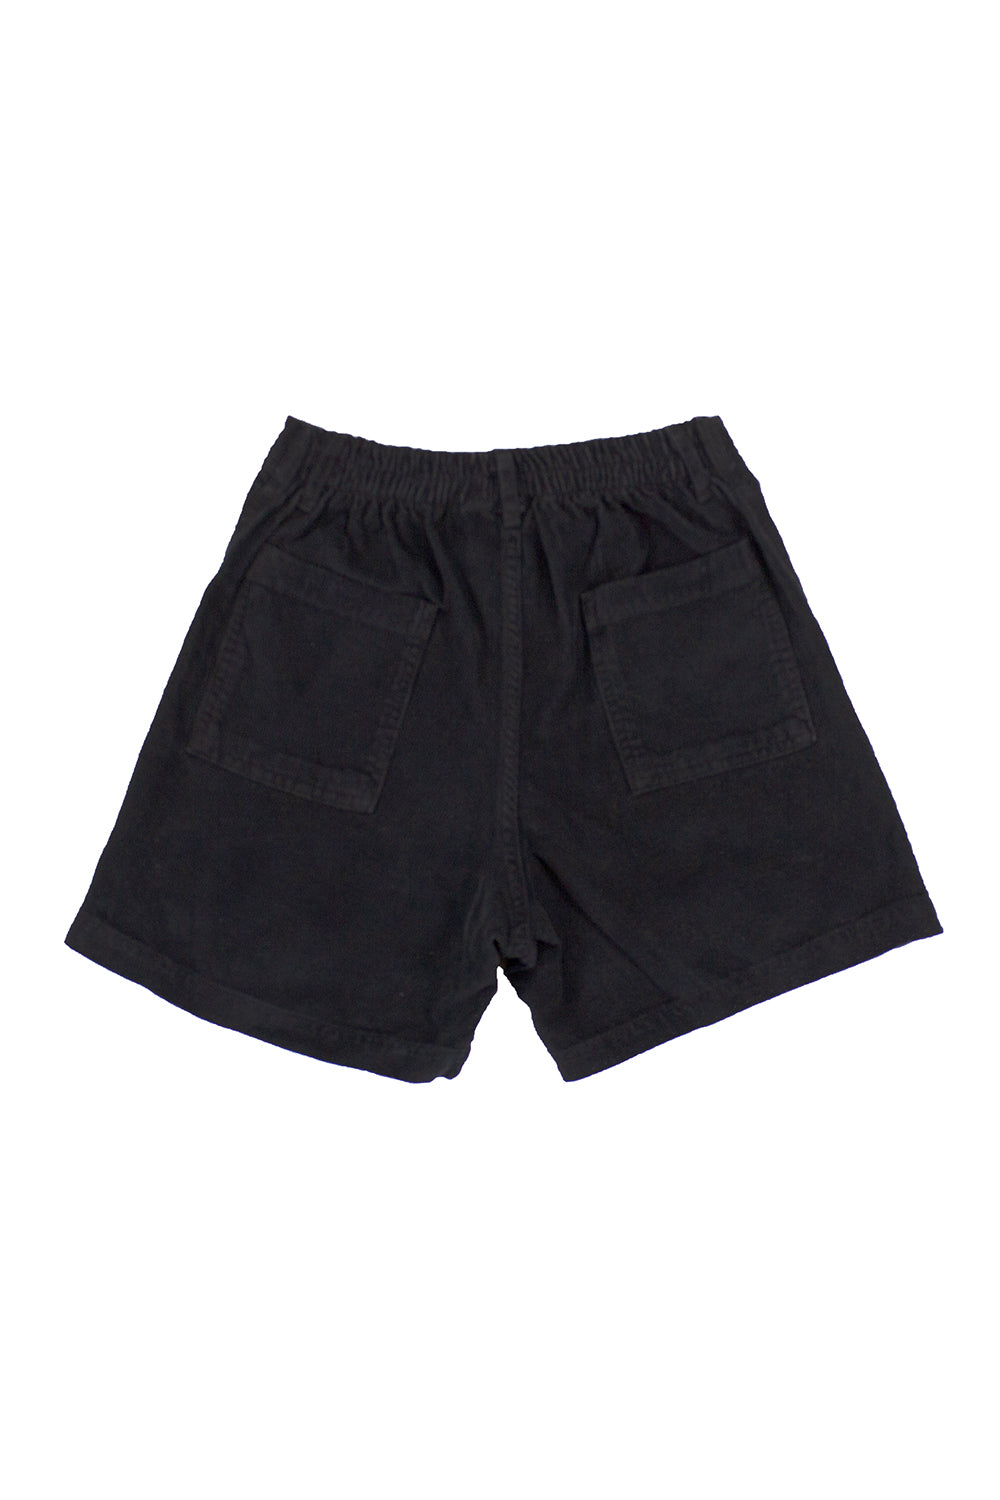 Cabuya Cord Short | Jungmaven Hemp Clothing & Accessories / model_desc: Back in Black